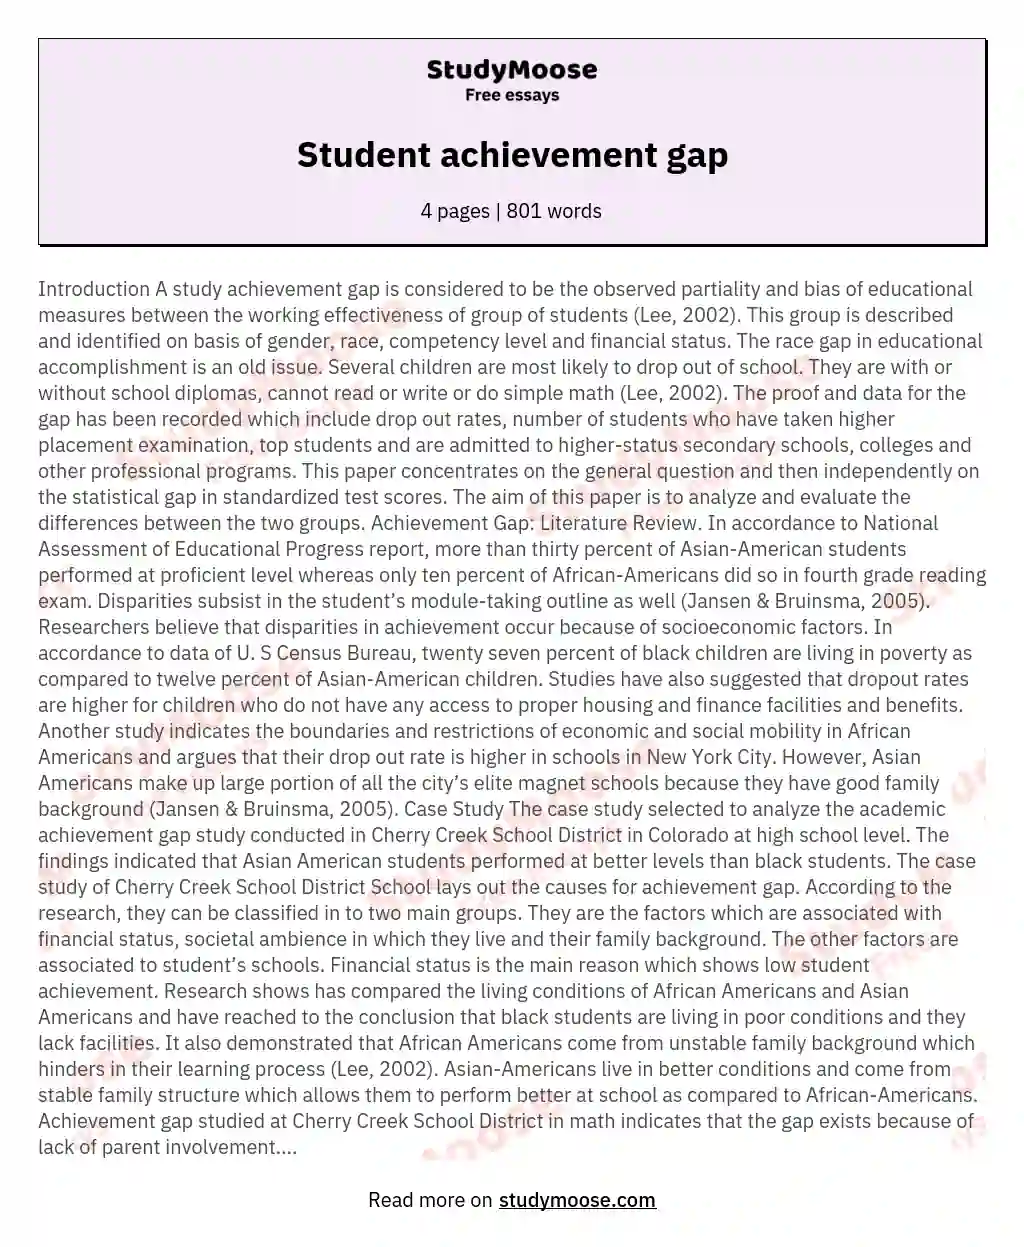 Student achievement gap essay